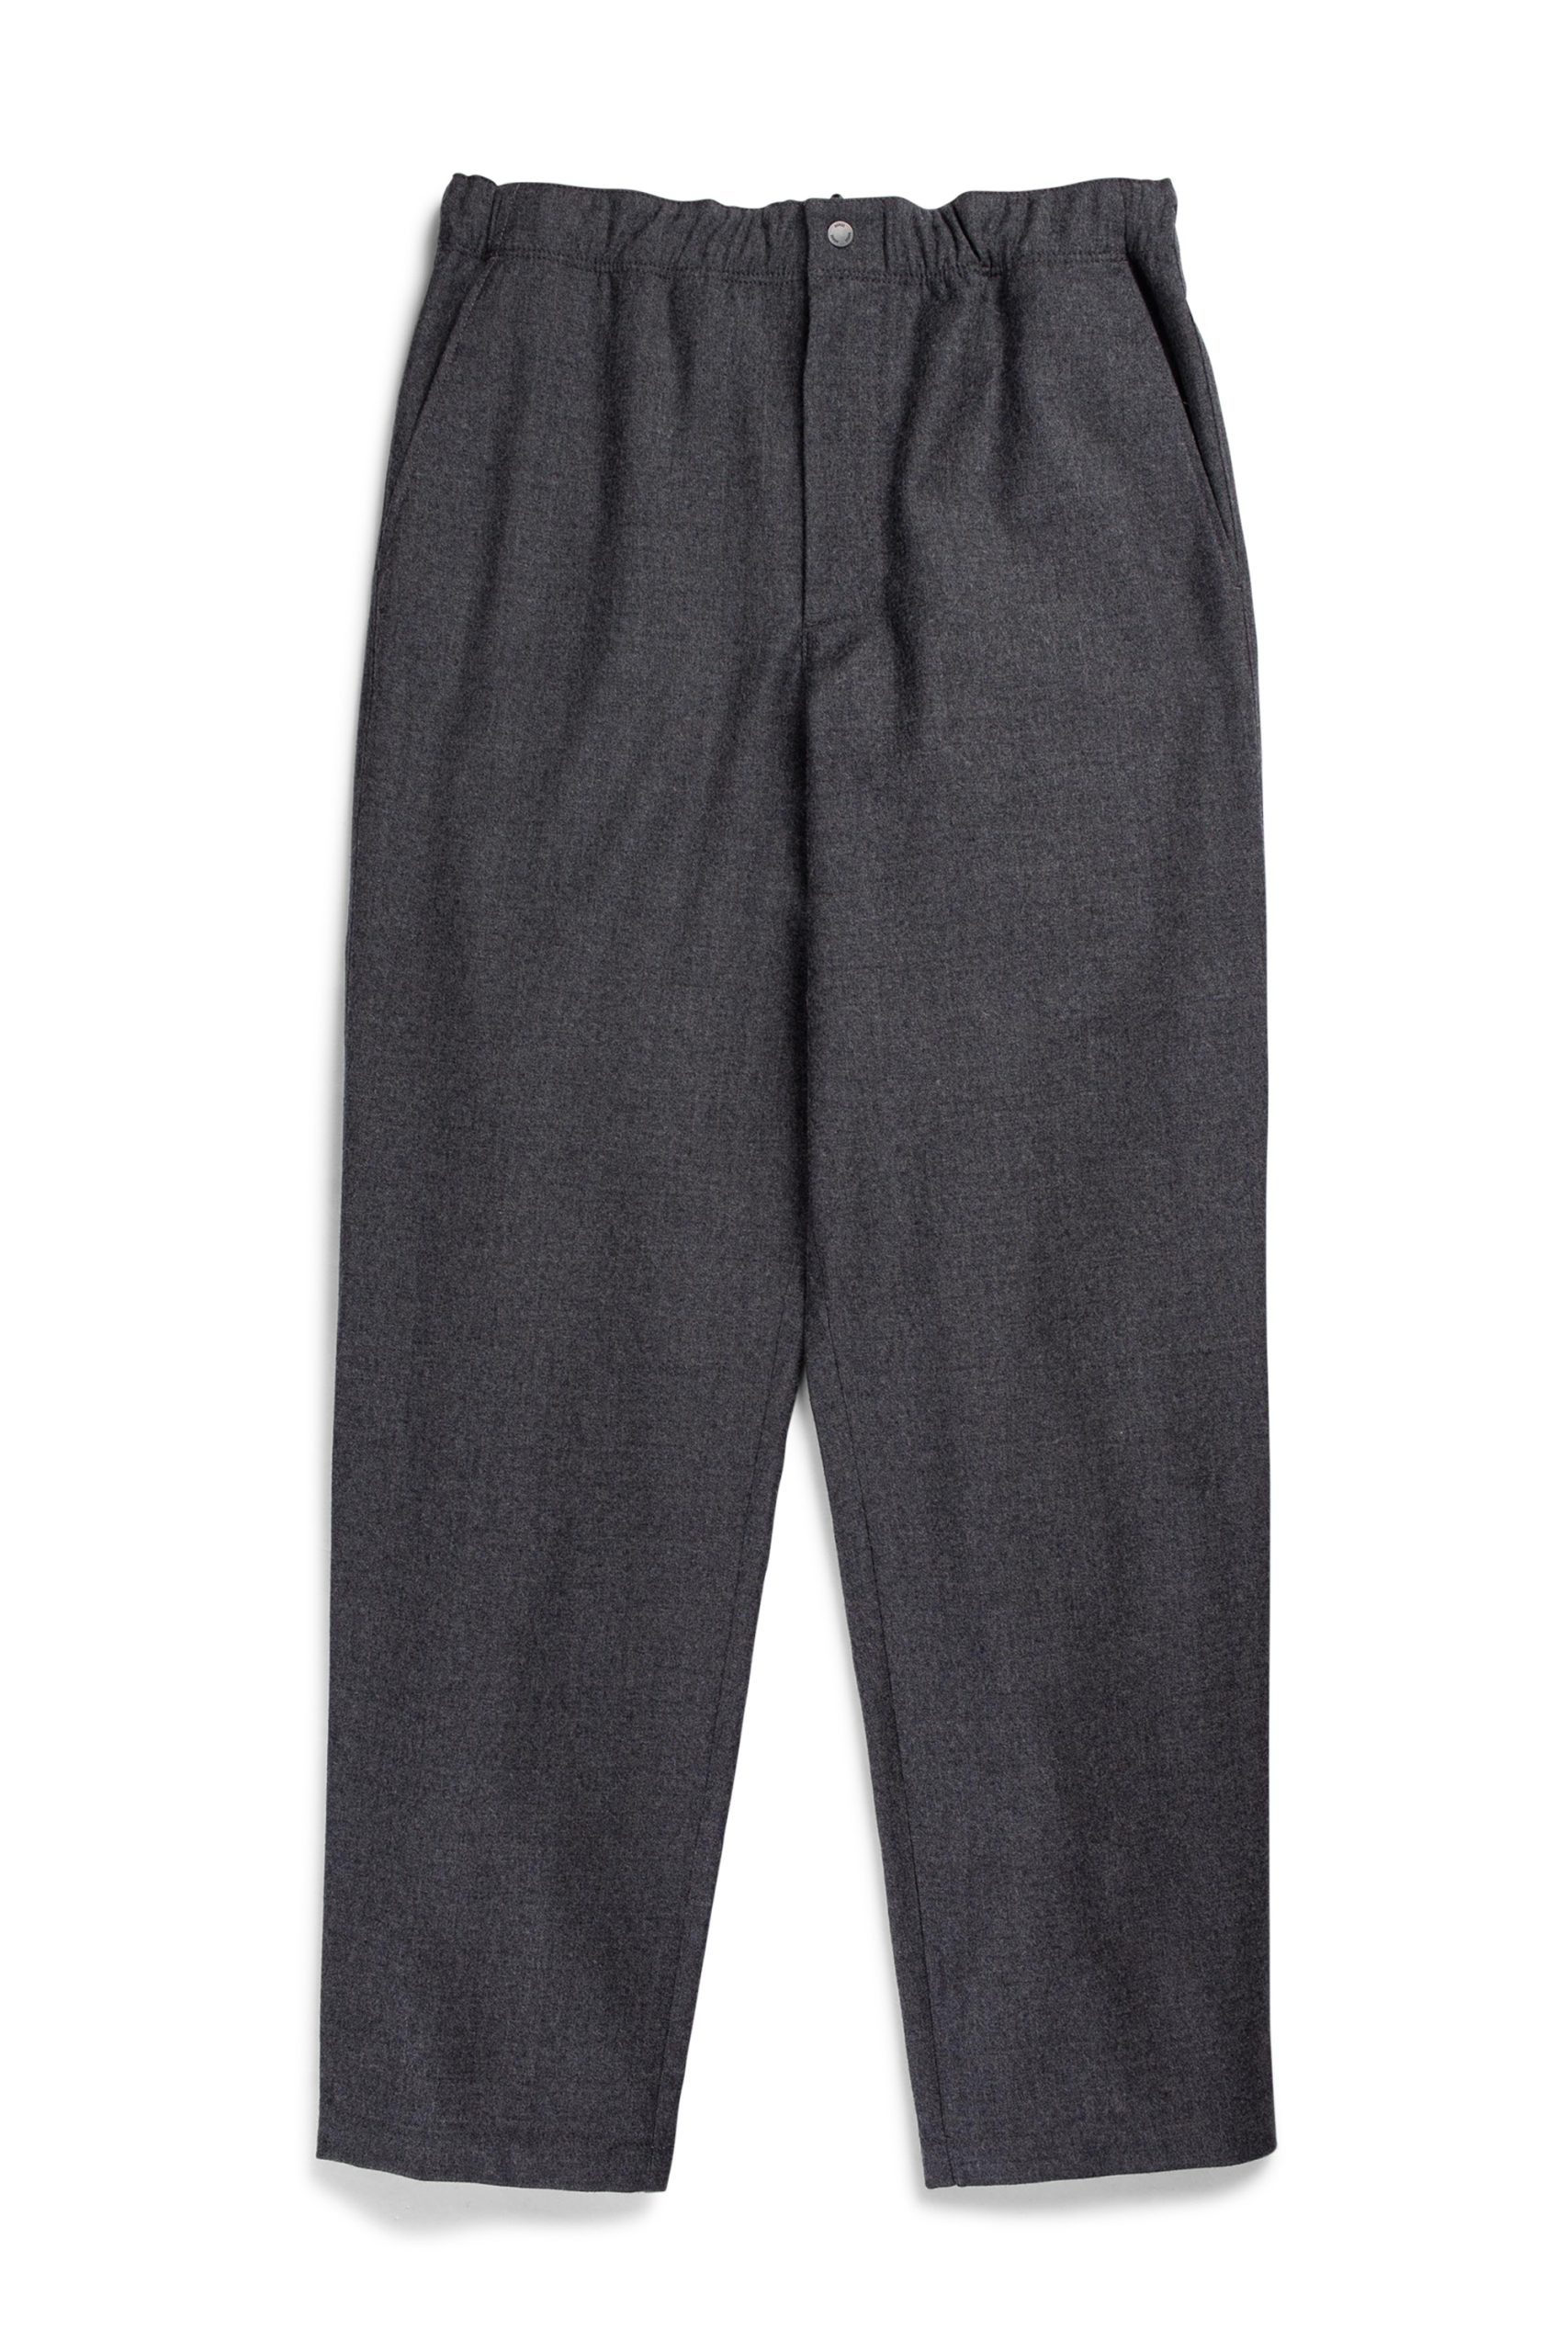 NORSE PROJECT Pantalon EZRA Wool flannel Charcoal